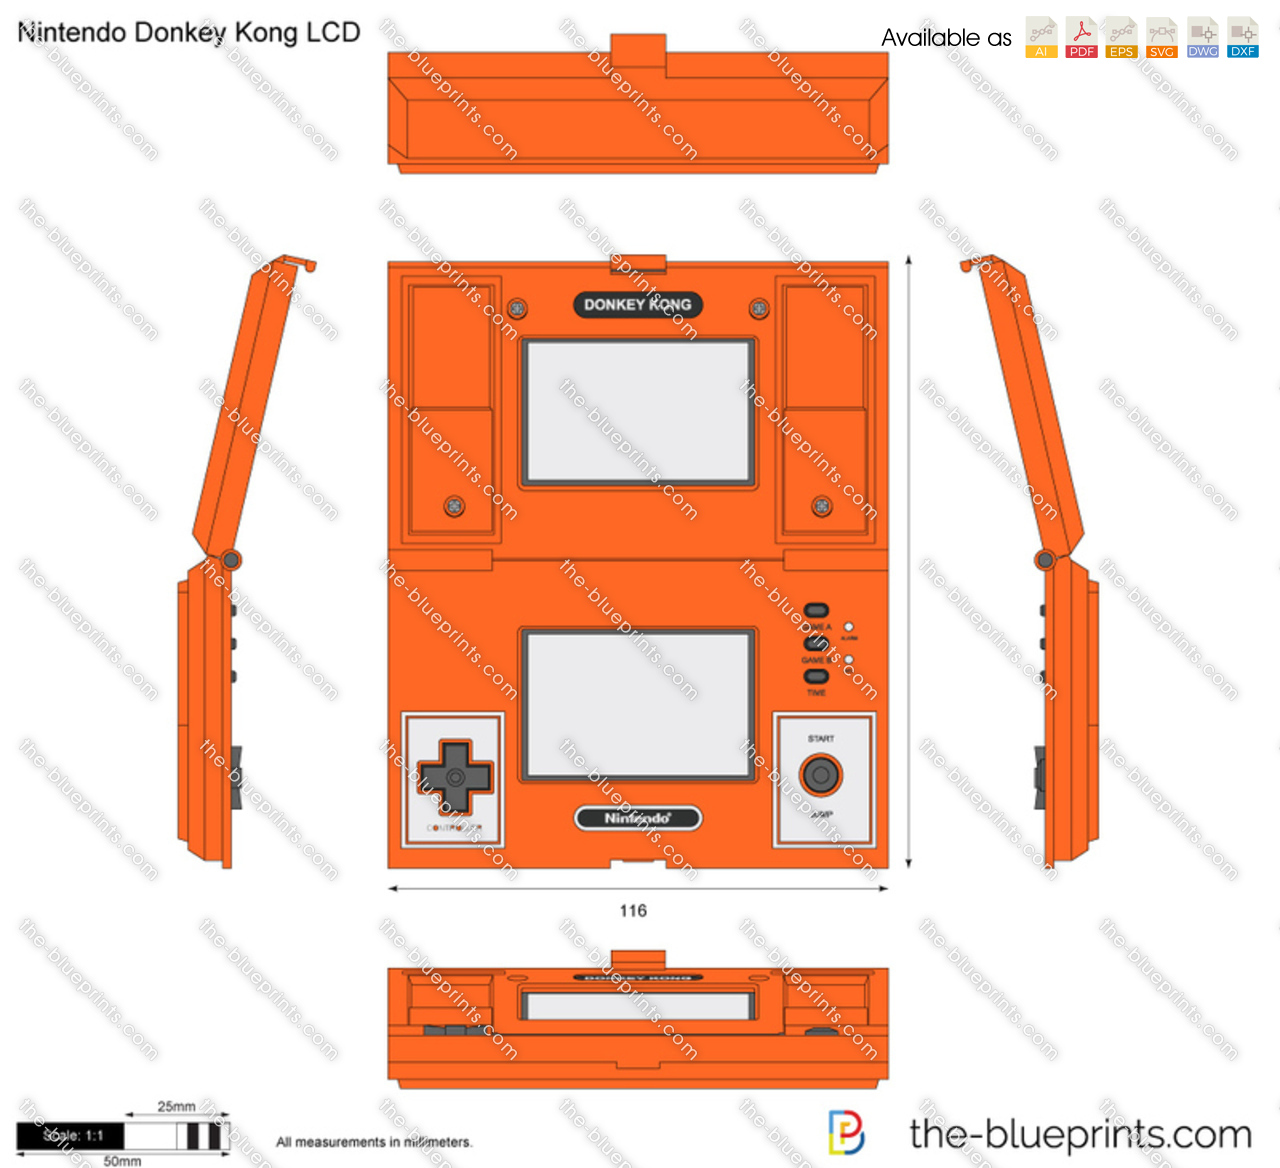 Nintendo Donkey Kong LCD